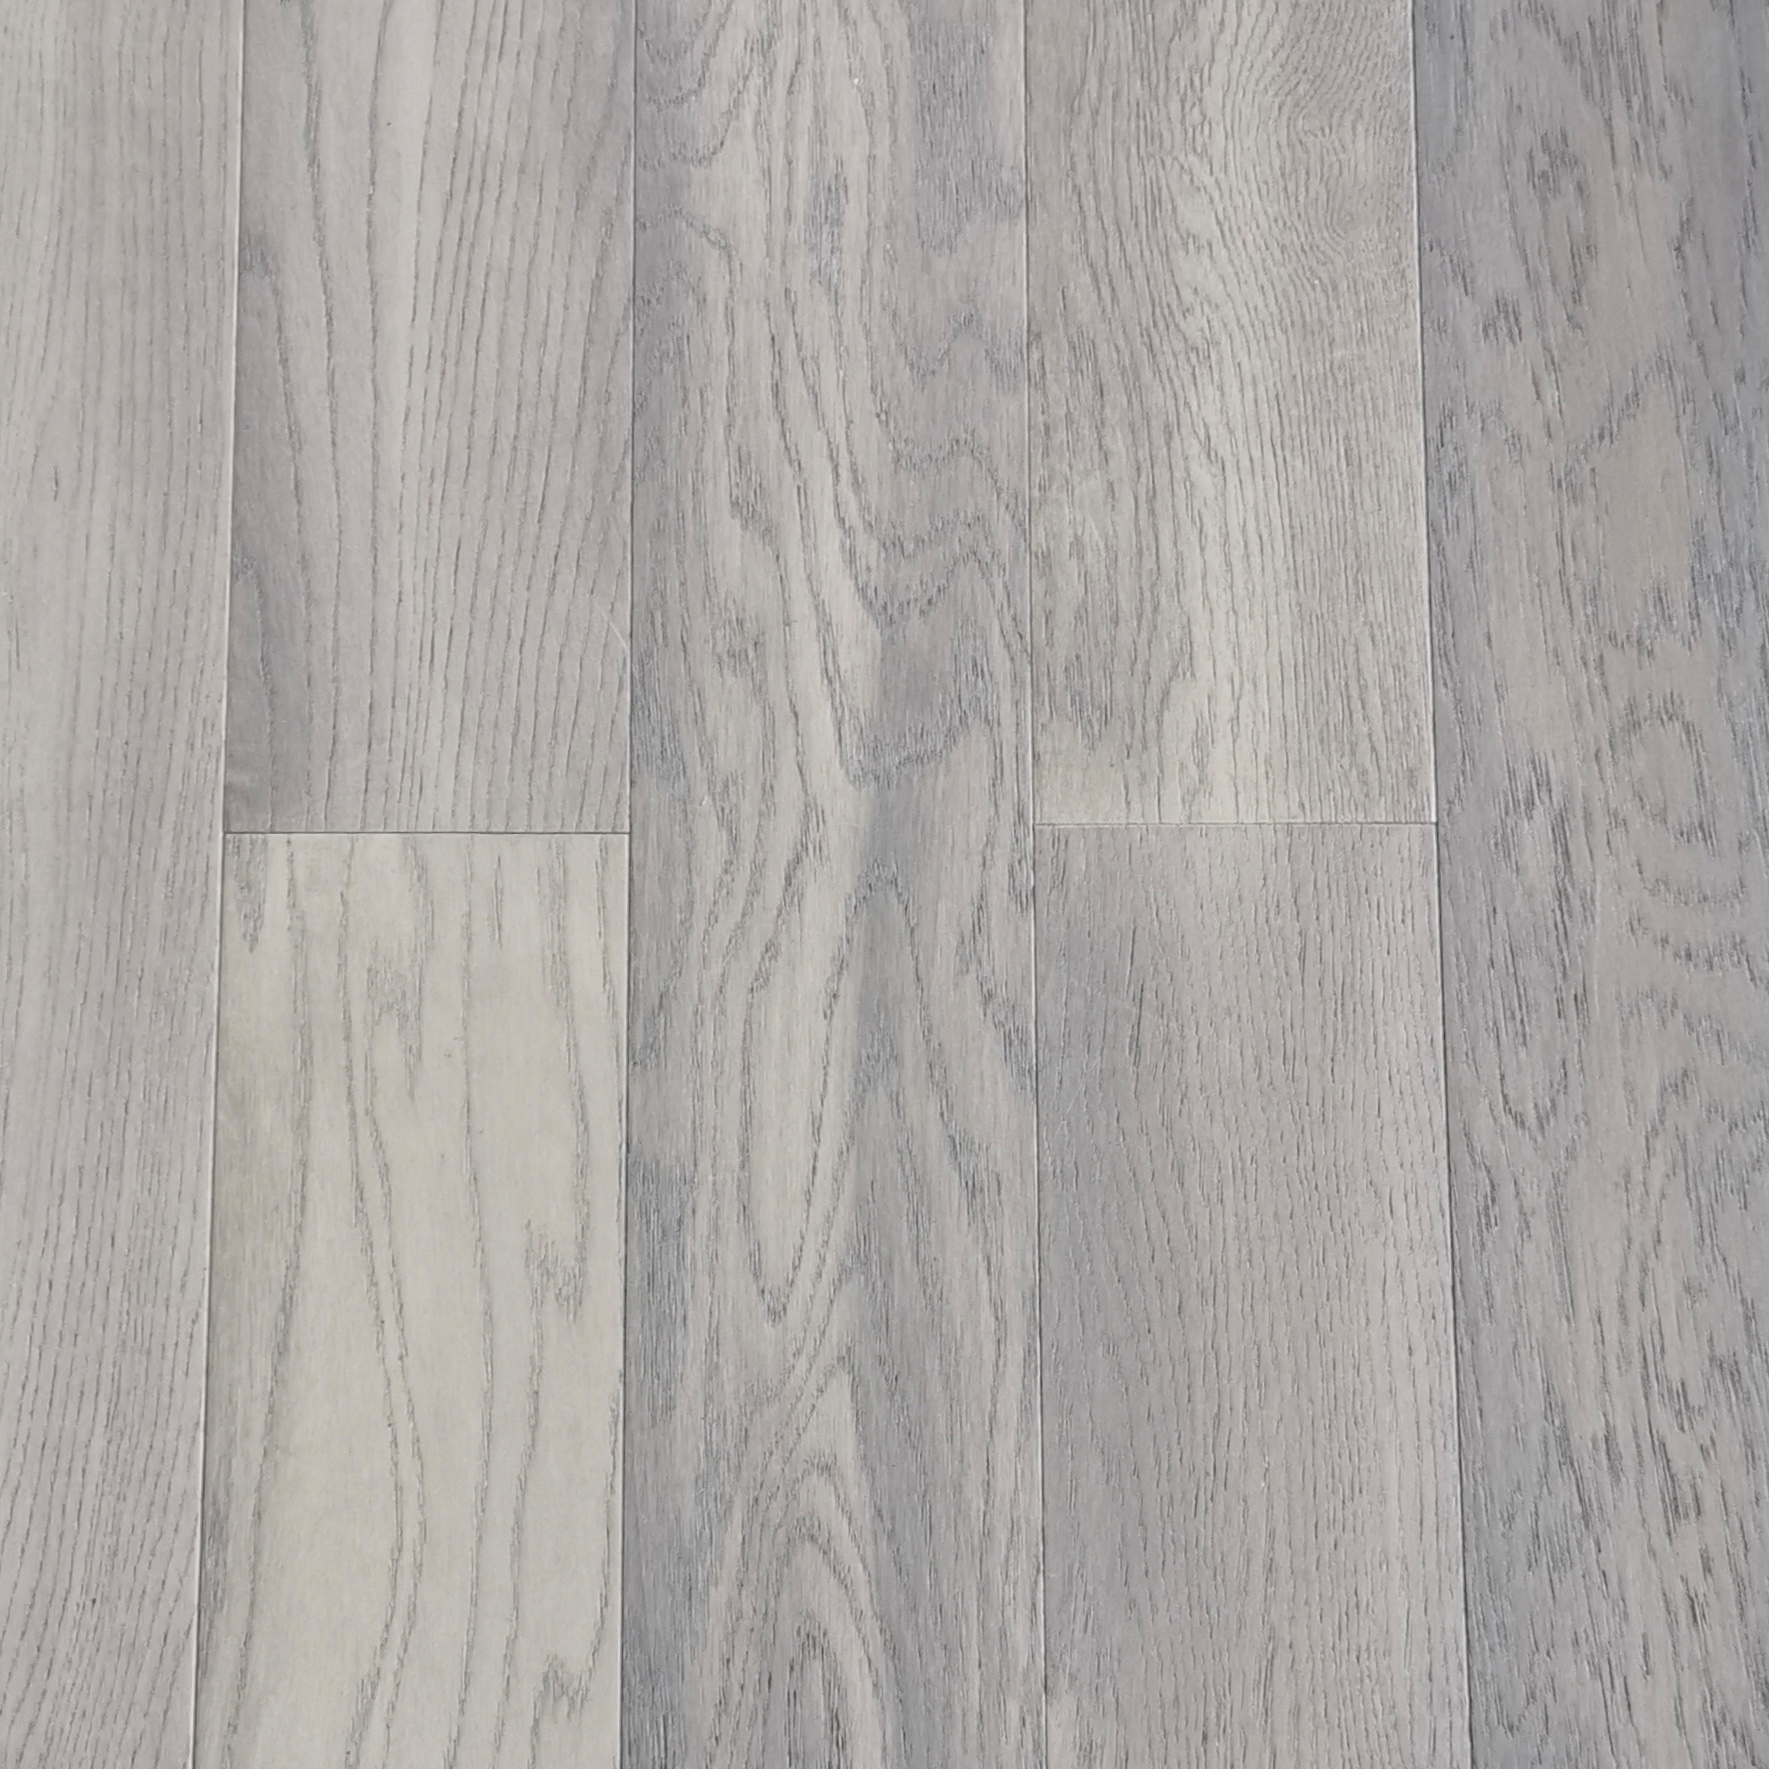 2020 China New Design Timber Flooring Boards -
 100% Waterproof Luxury Wood Veneer SPC Flooring with SPC Core Base – Kangton